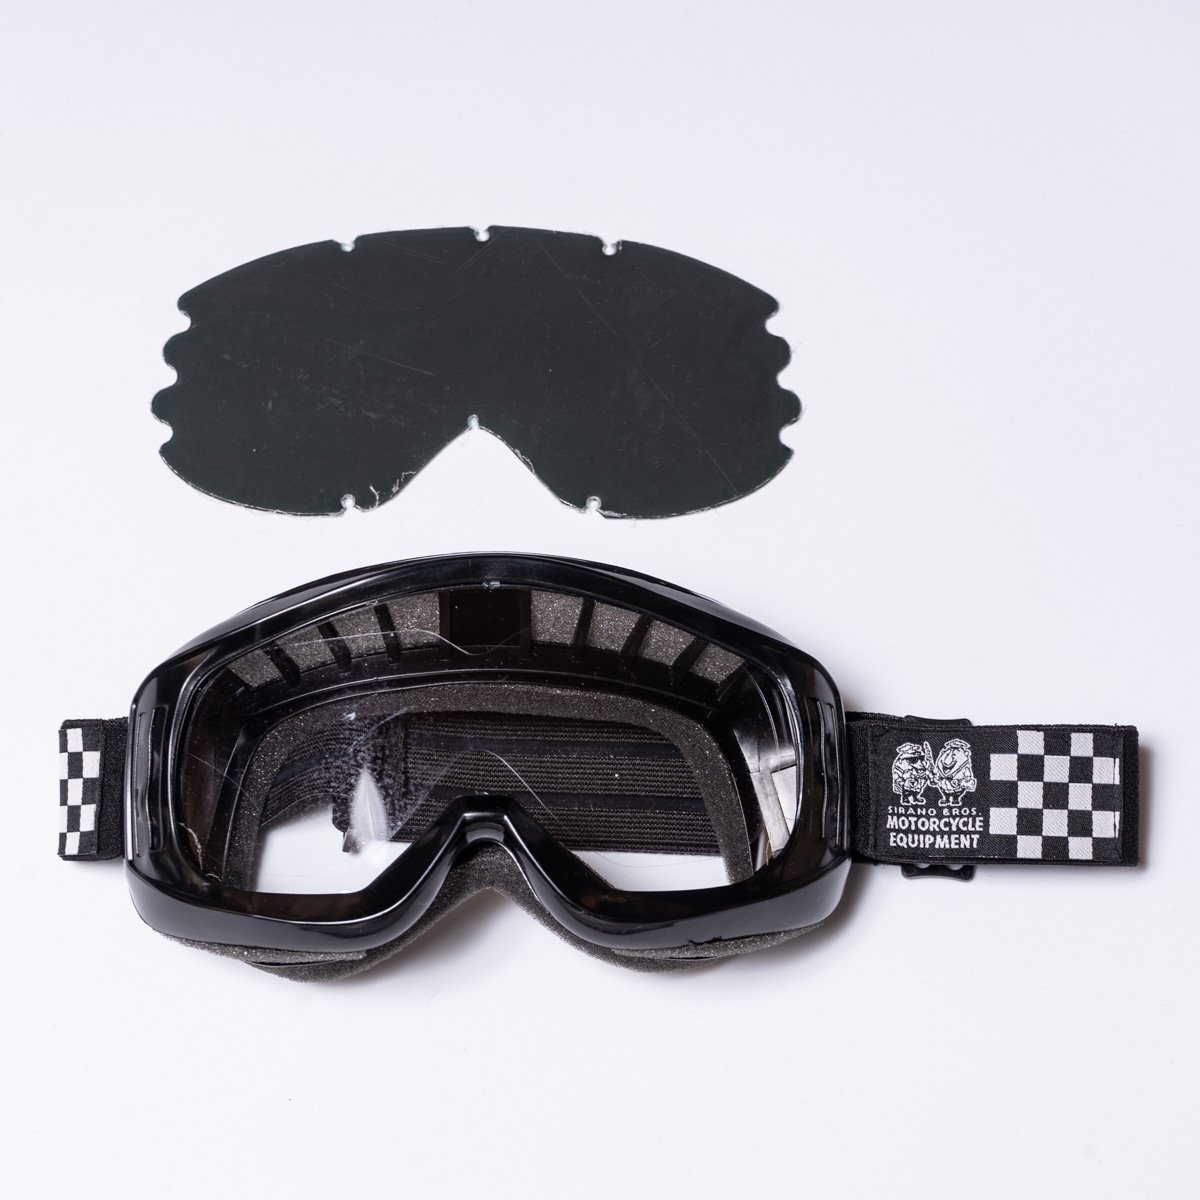 SME] Vintage Motocross Goggles - Web store | SIRANO BROS. & Co.